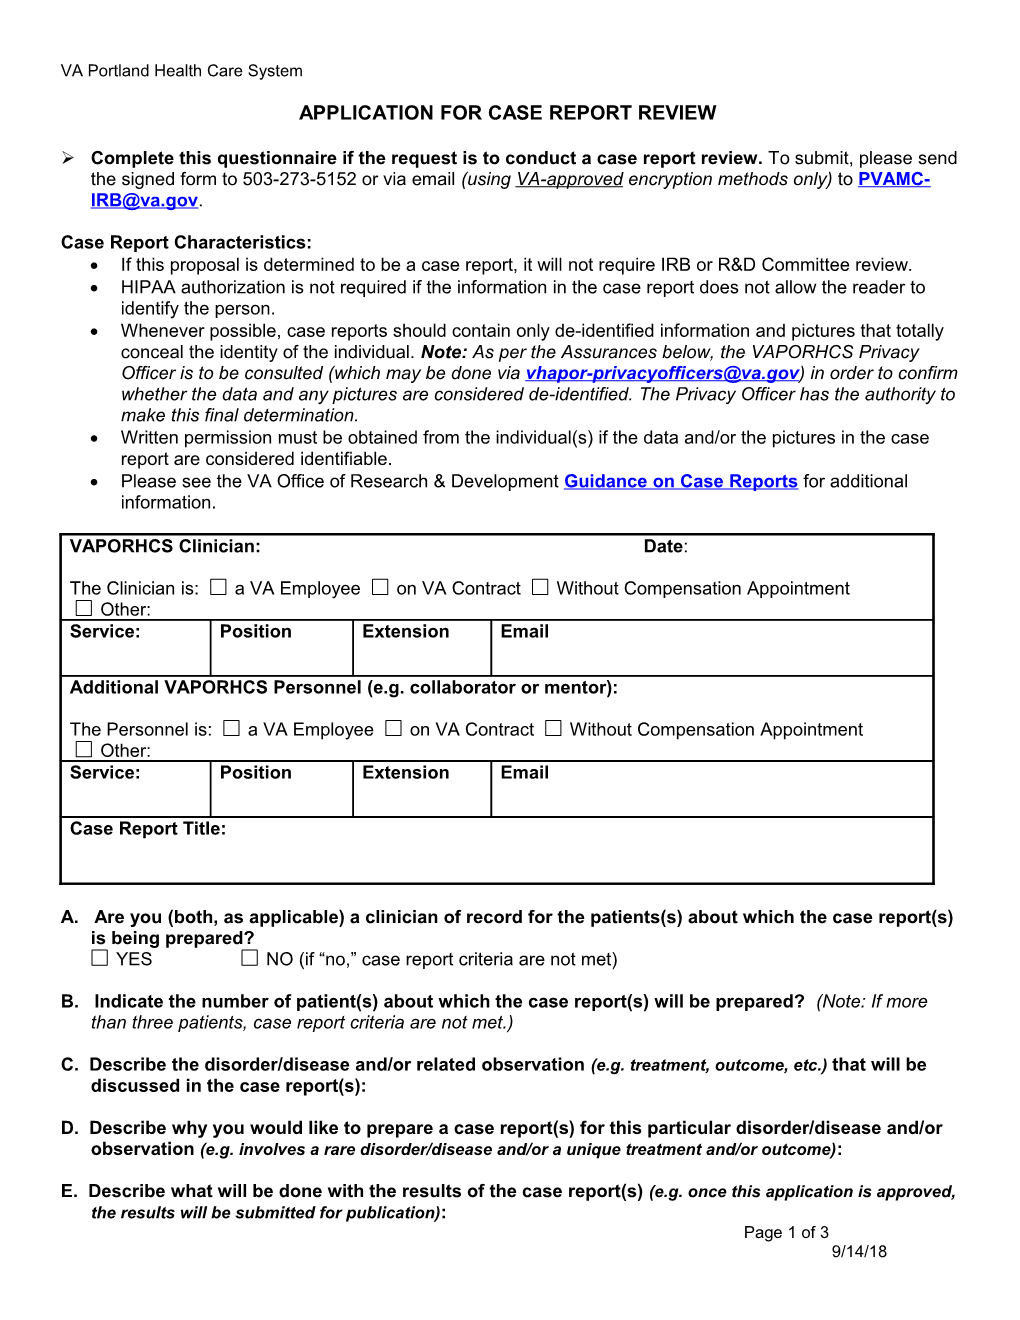 Application for Case Report Review (Portland VA Medical Center)